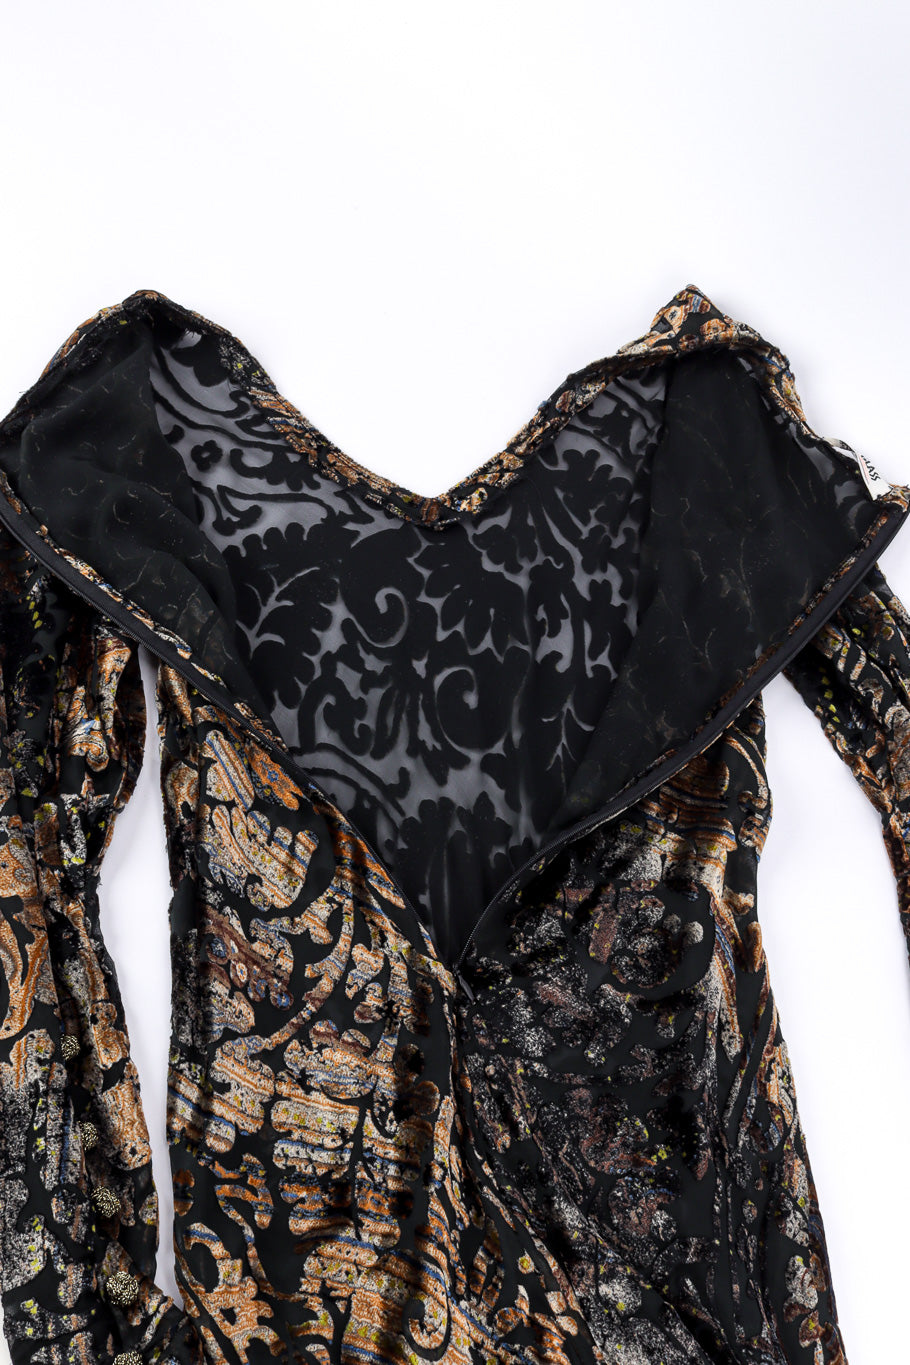 Vintage Bill Blass Baroque Velvet Dress back unzipped @recessla